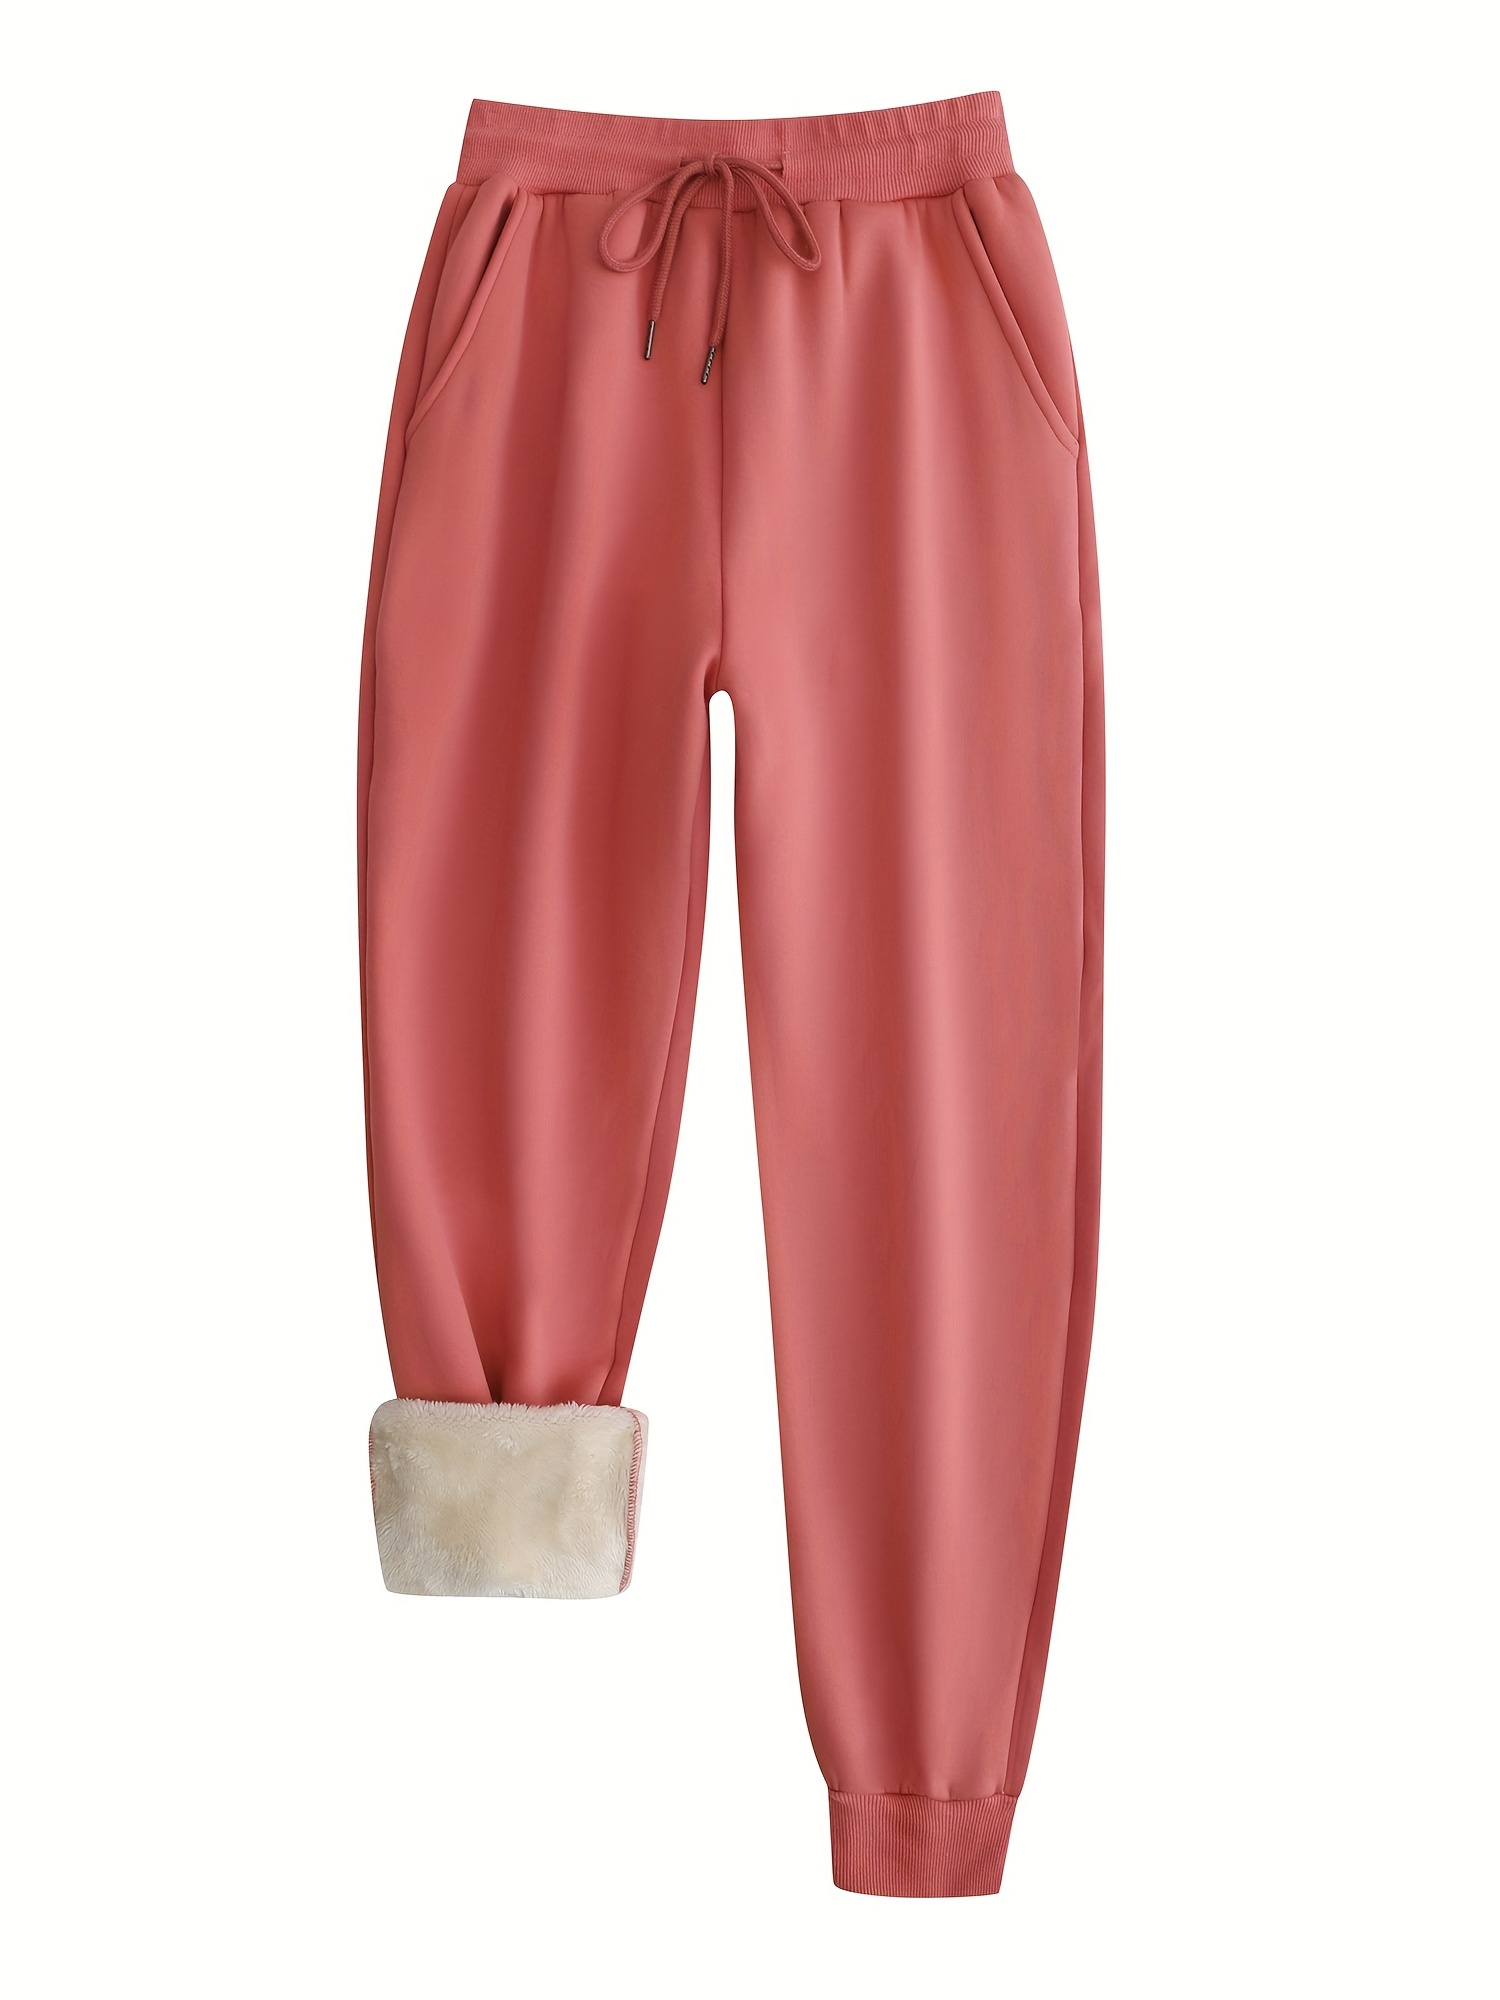 plush thermal pants, winter plush thermal pants casual drawstring pocket pants womens clothing details 6